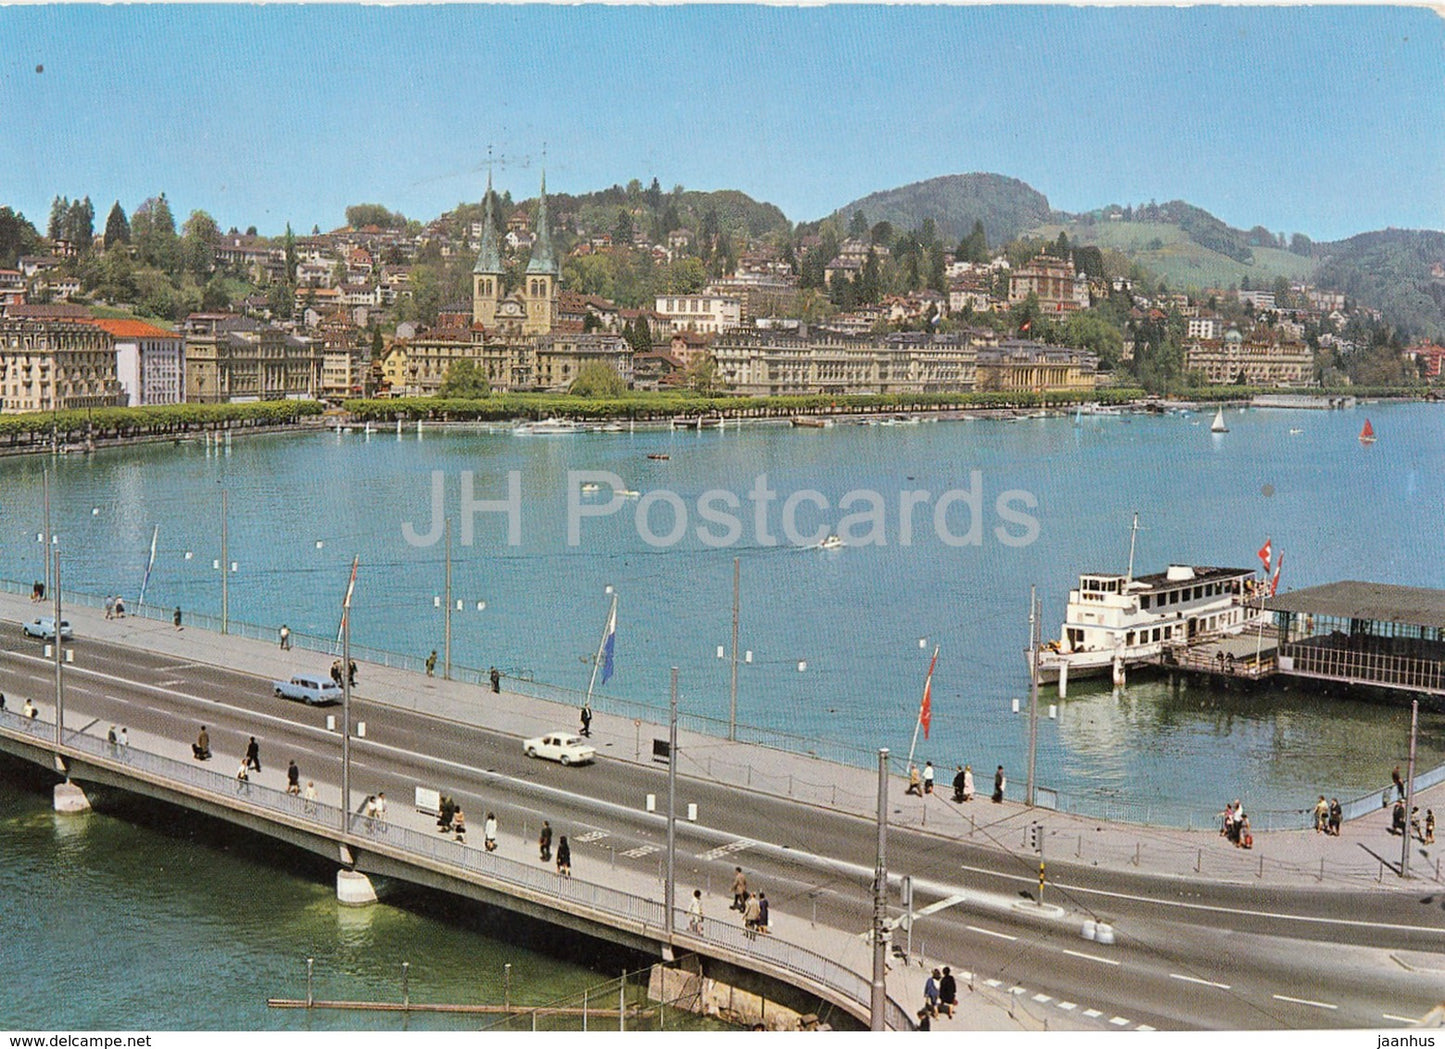 Lucerne - Luzern - Seebrucke mit Nationalquai - passenger boat - bridge - 1971 - Switzerland - used - JH Postcards